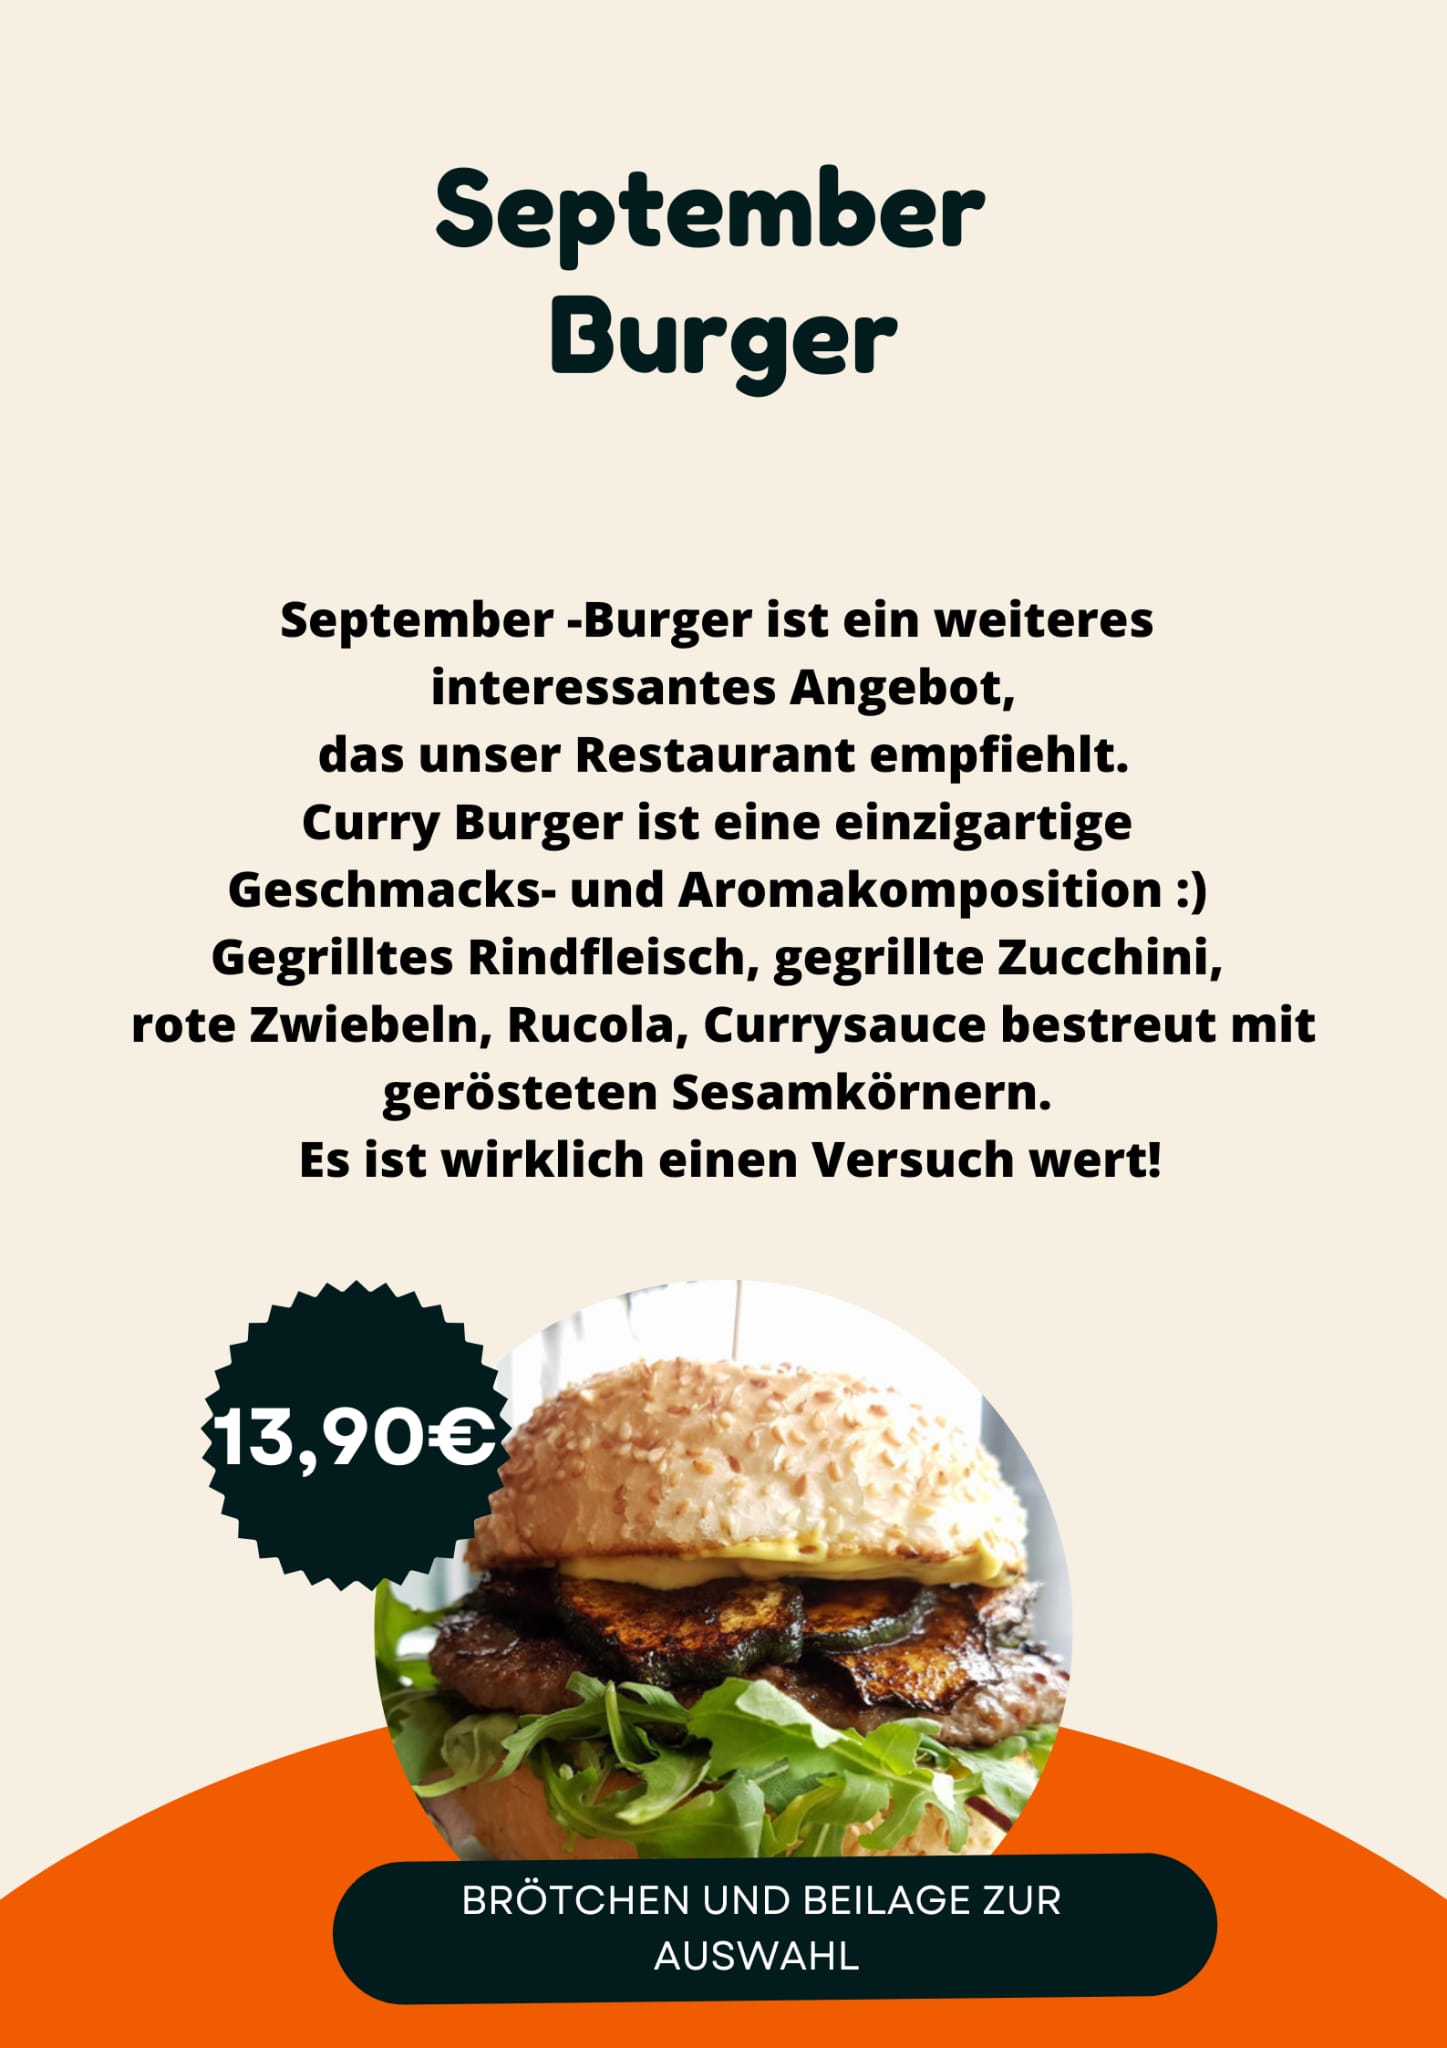 September burger